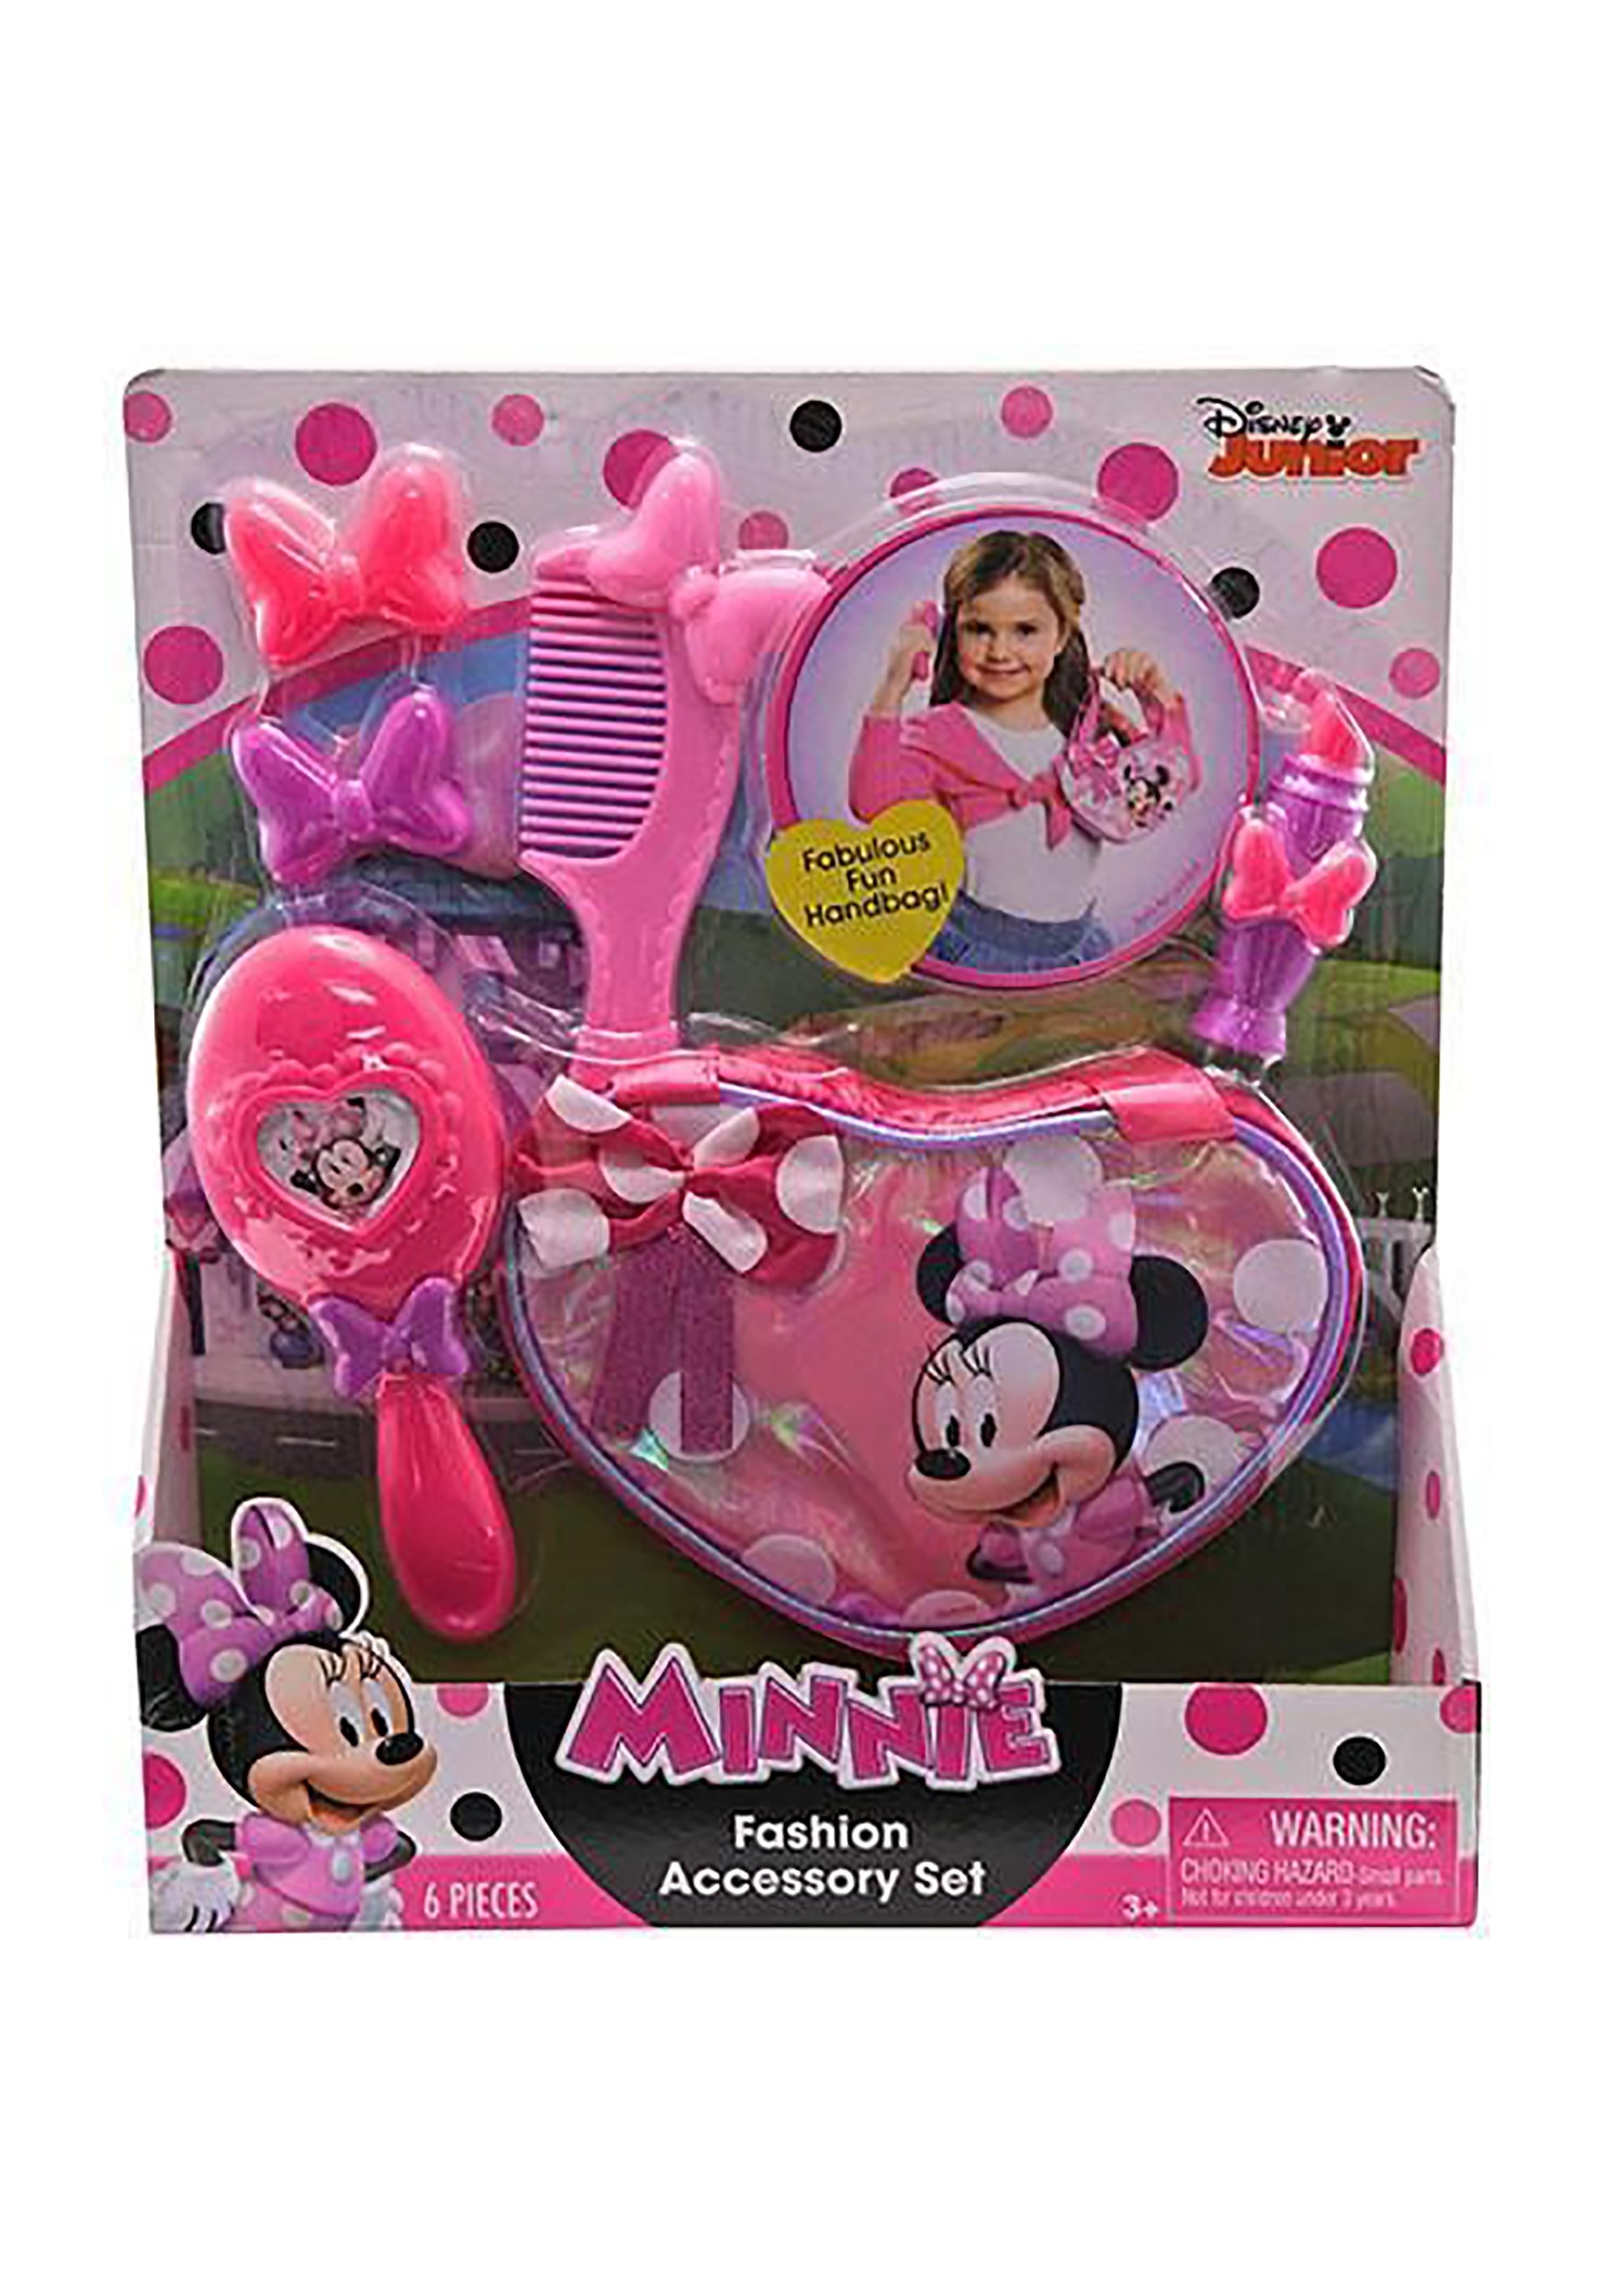 Minnie Mouse Fashion Accessory Set